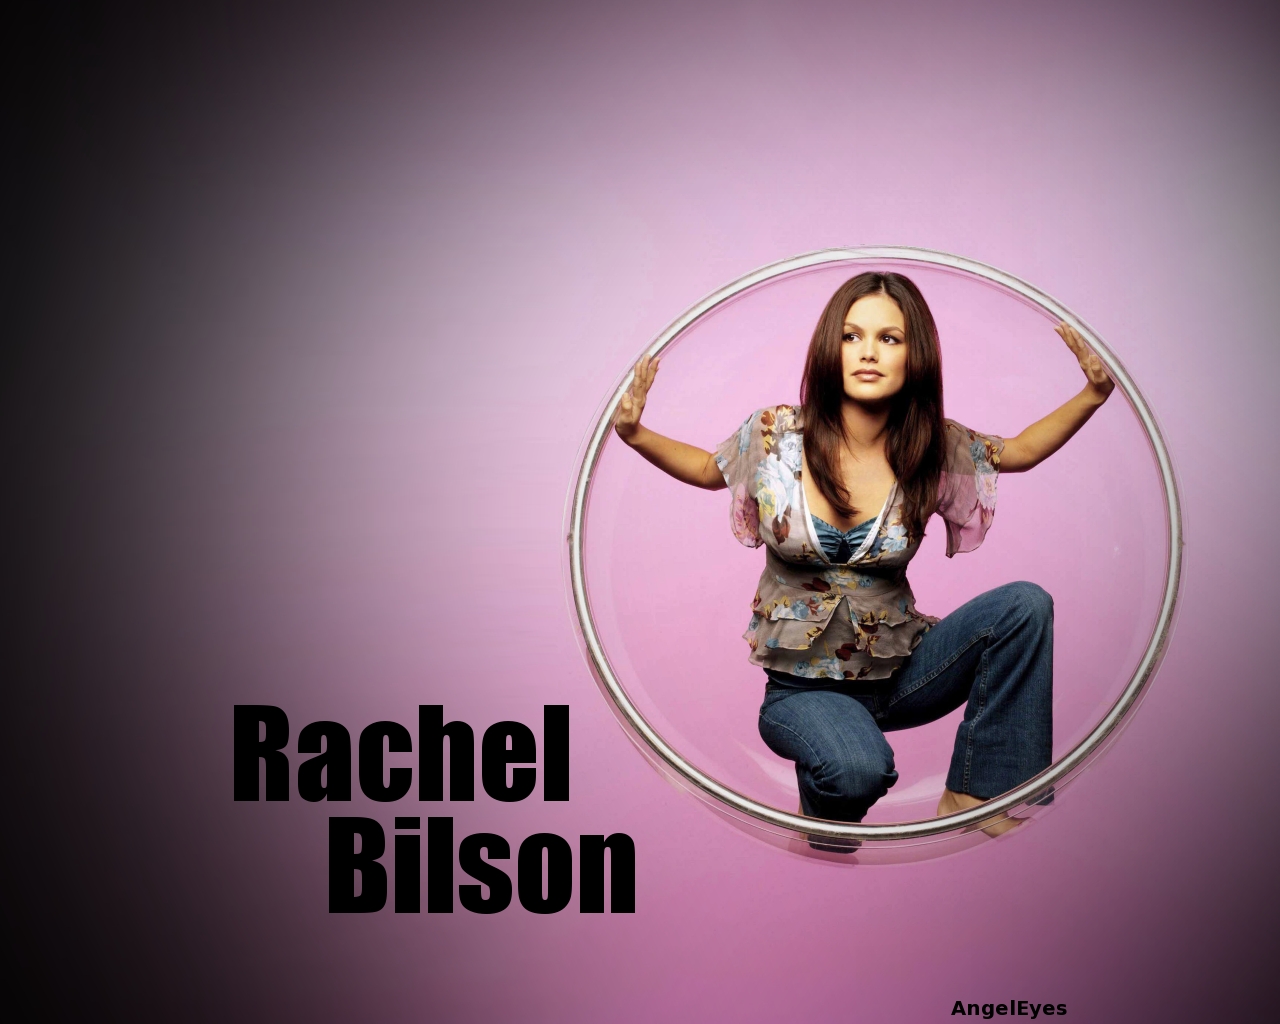 Rachel bilson 6